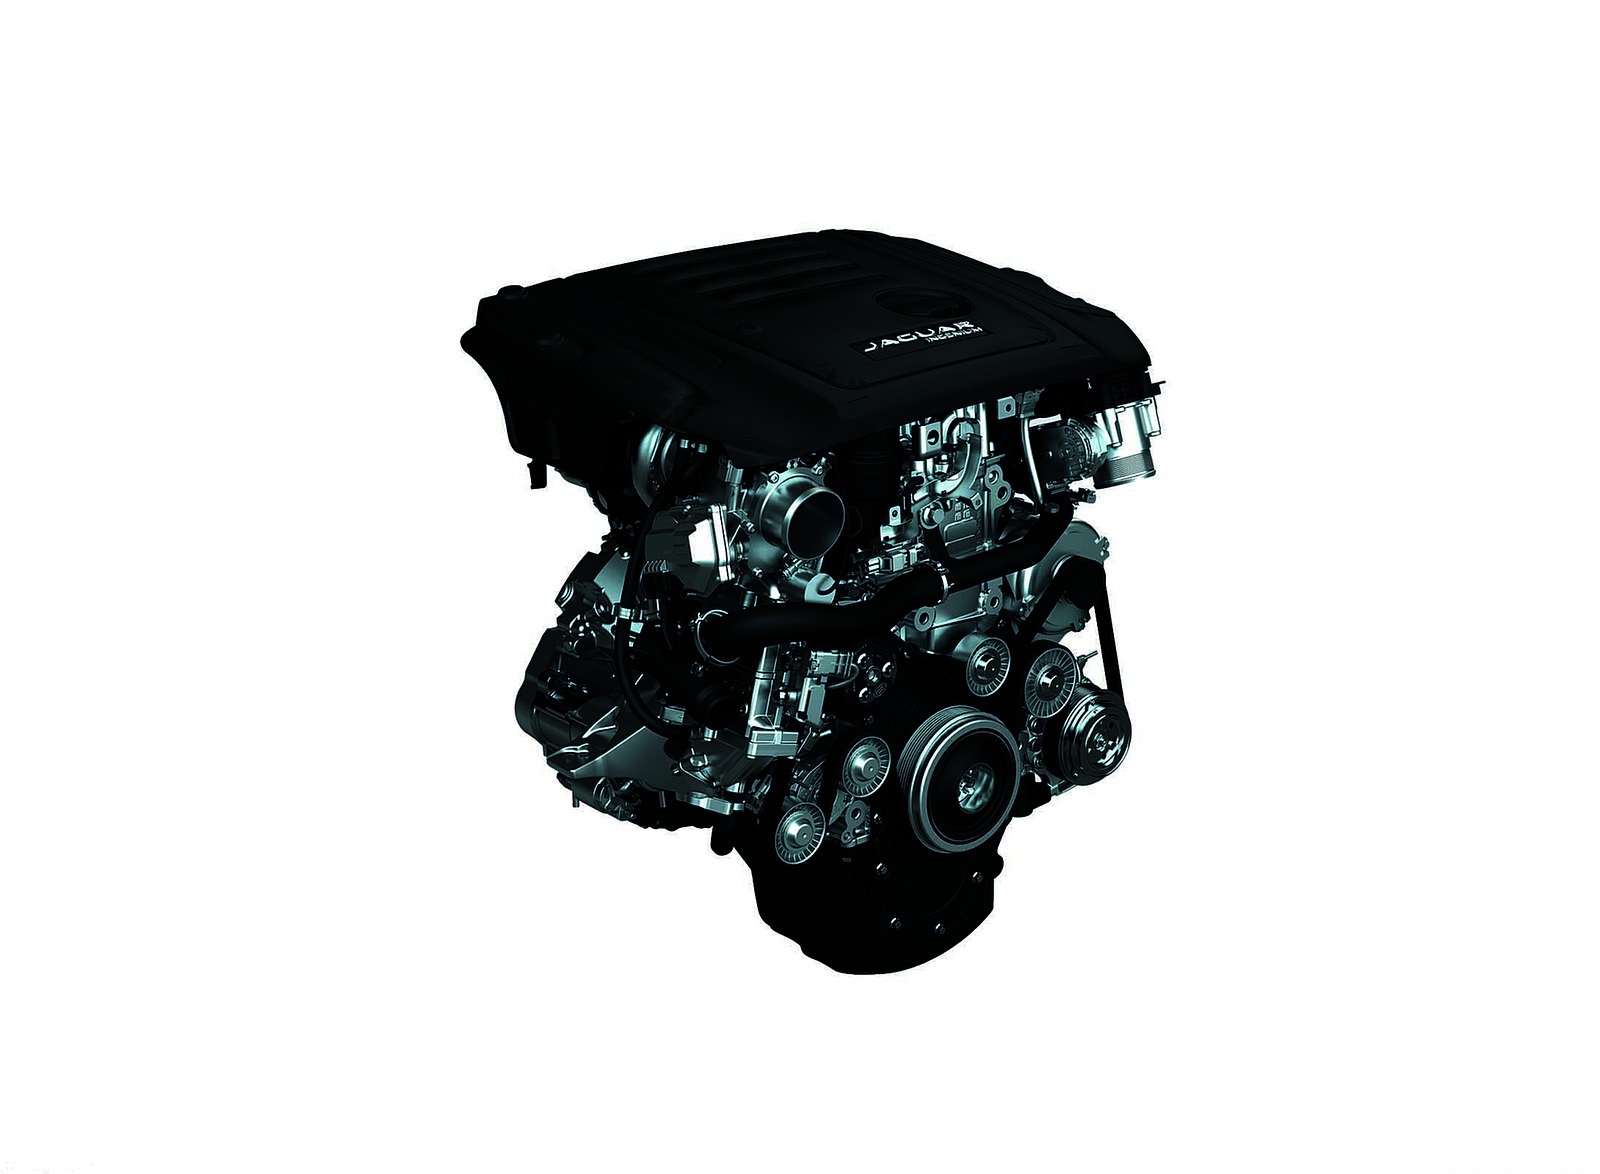 2018 Jaguar E-PACE Engine Wallpapers #87 of 100